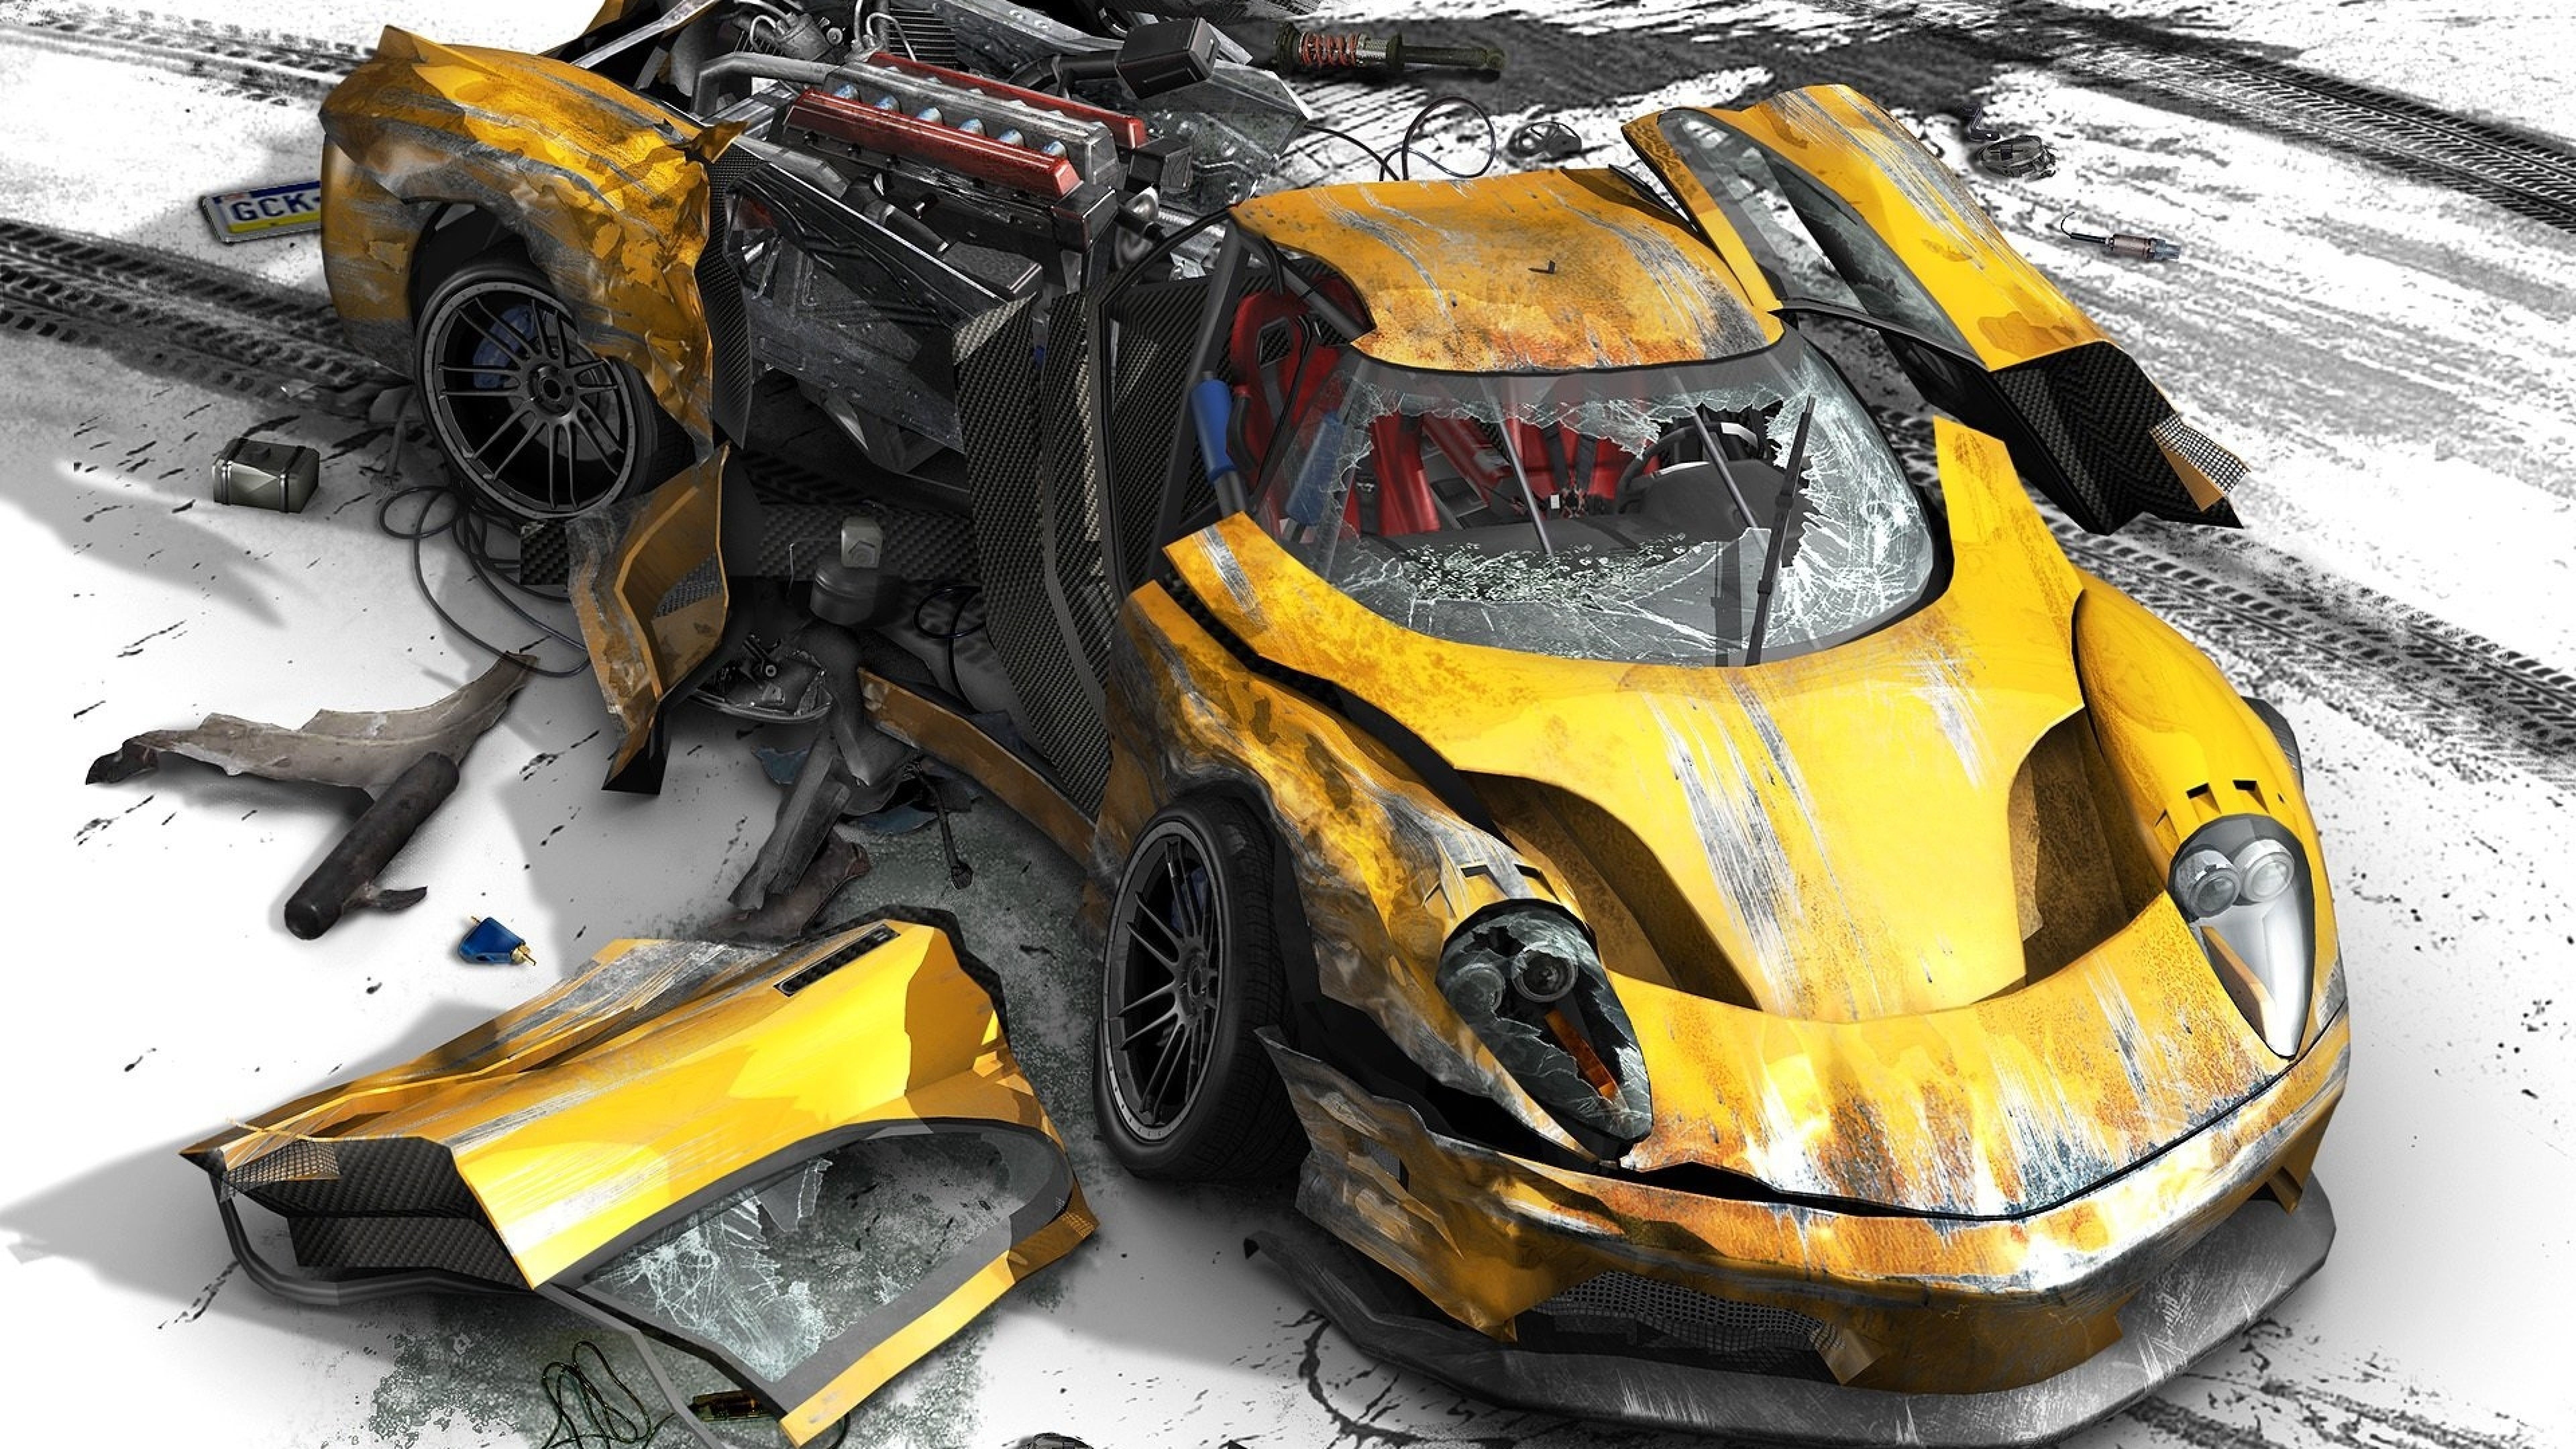 7680x4320 Burnout Accident Crash 8k Wallpaper Hd Games 4k Wallpaper Image Photo And Background